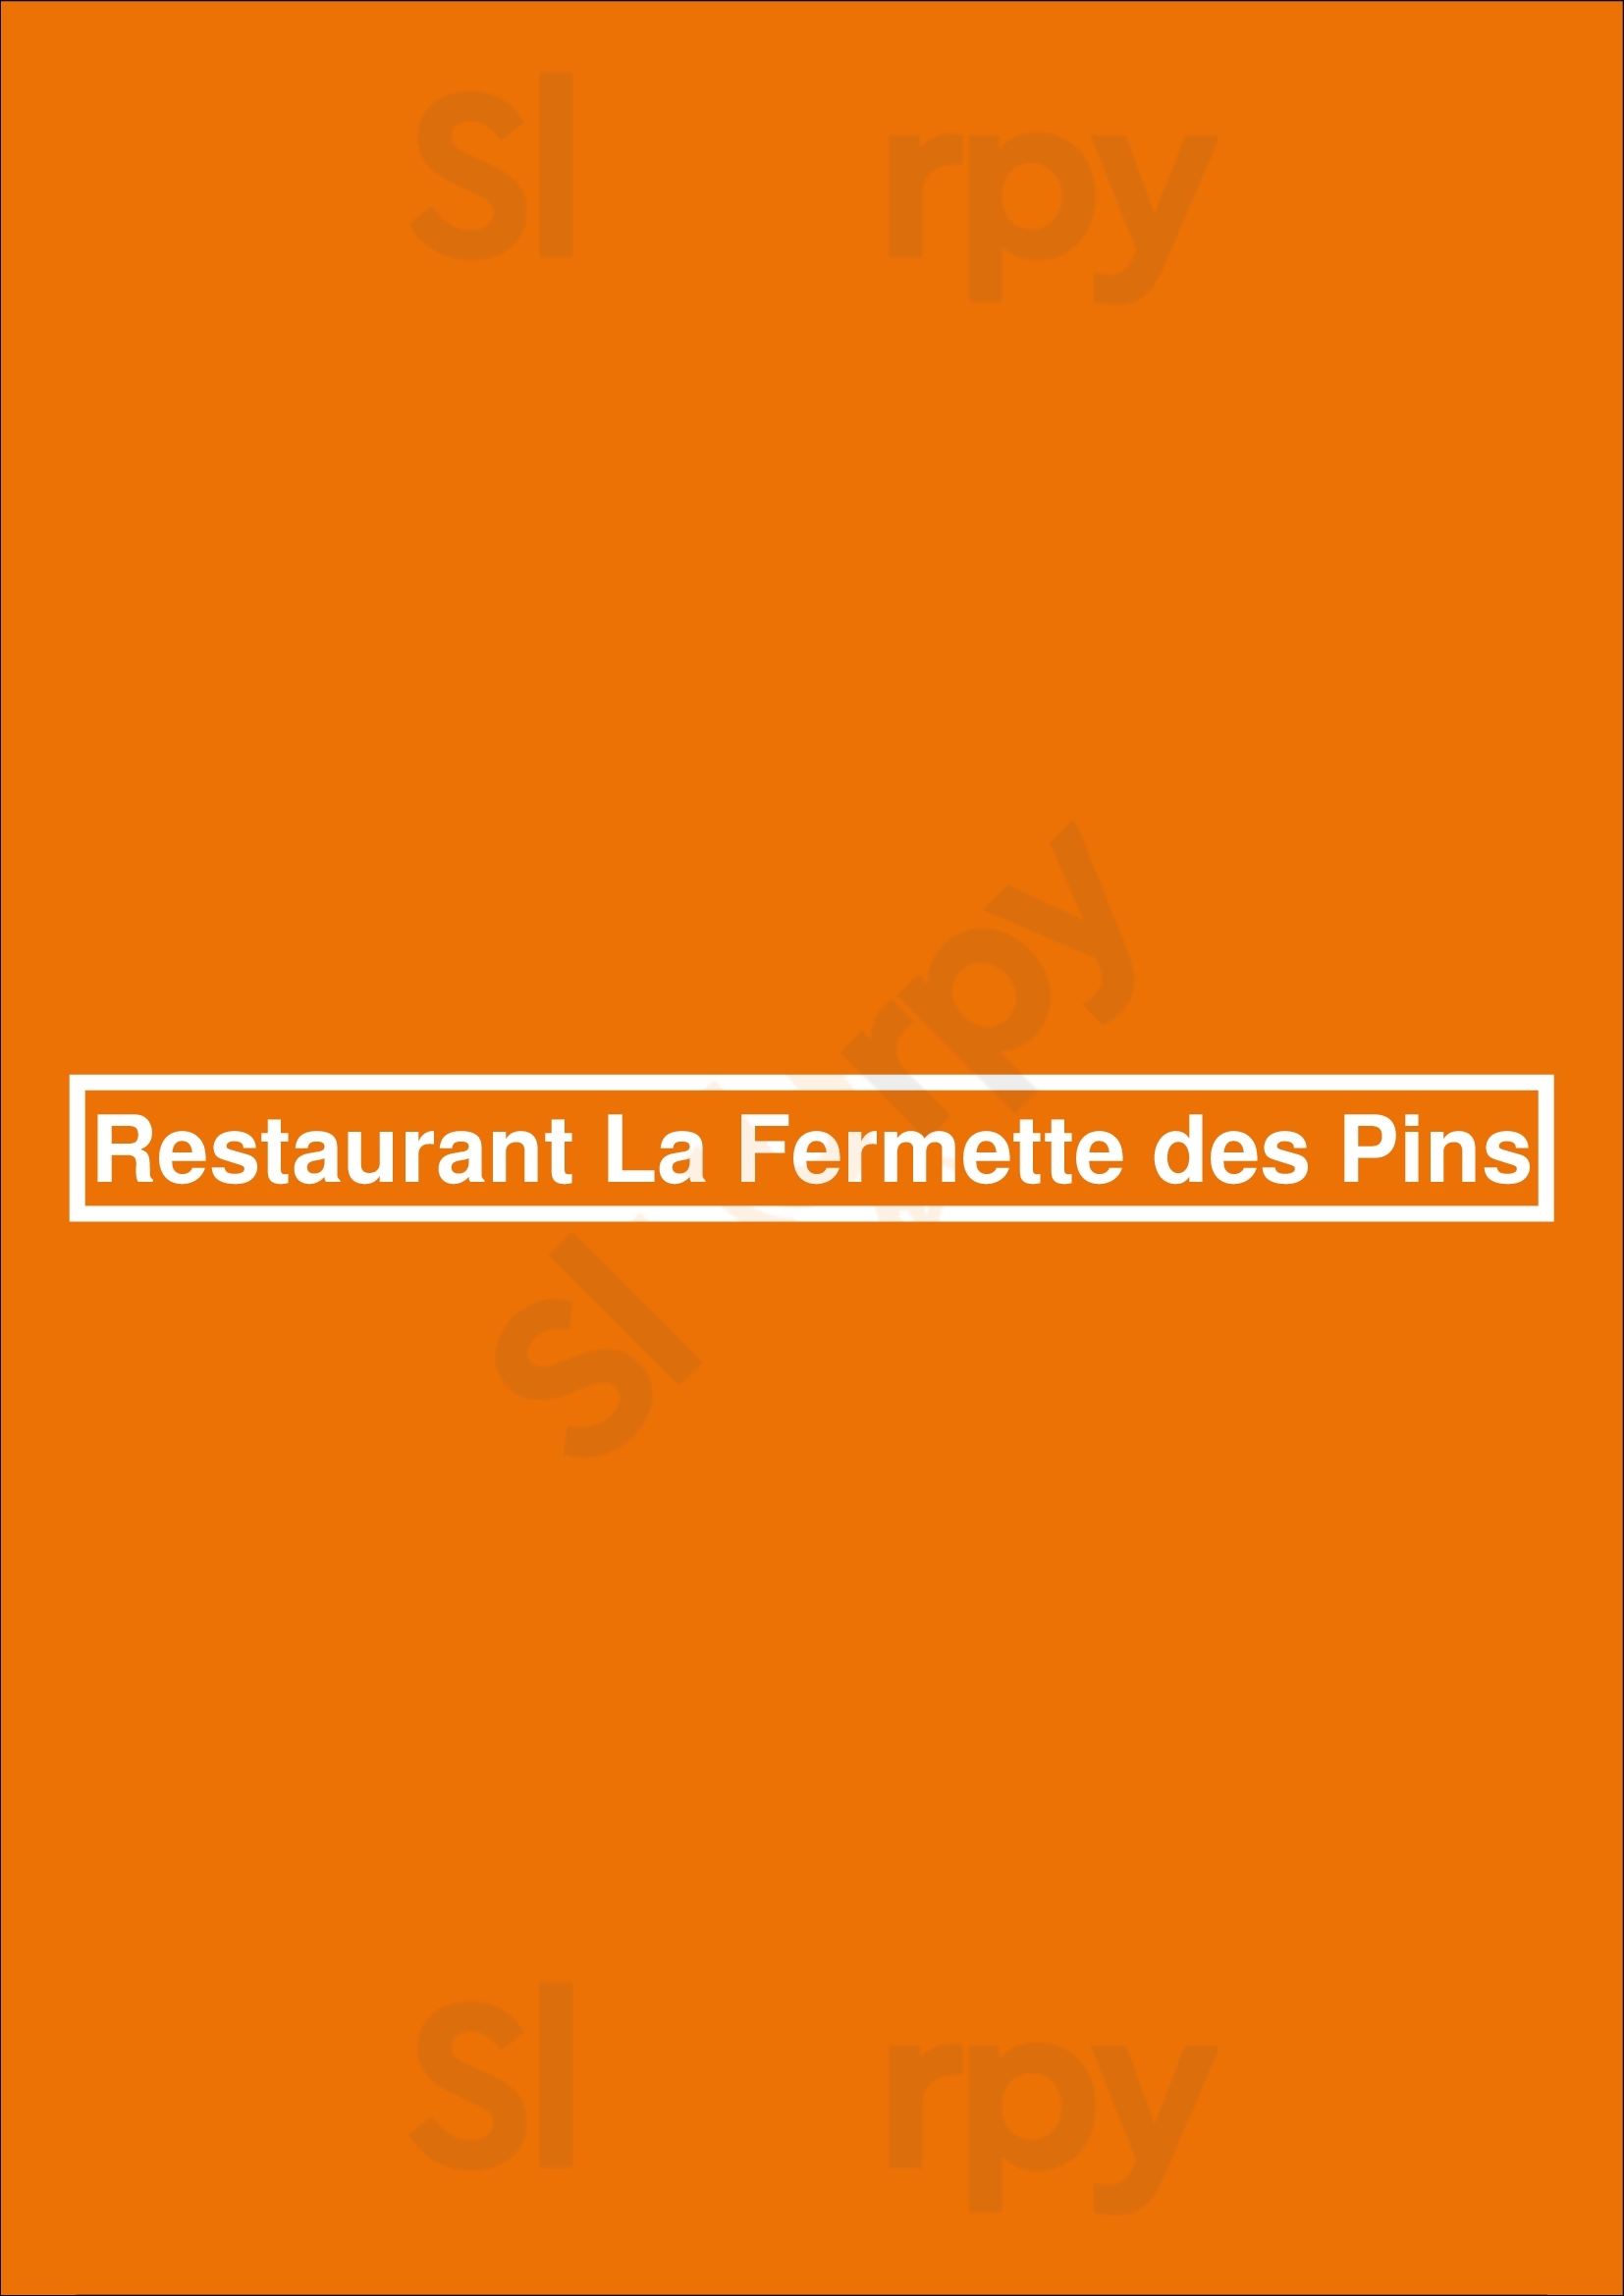 Restaurant La Fermette Des Pins Binche Menu - 1